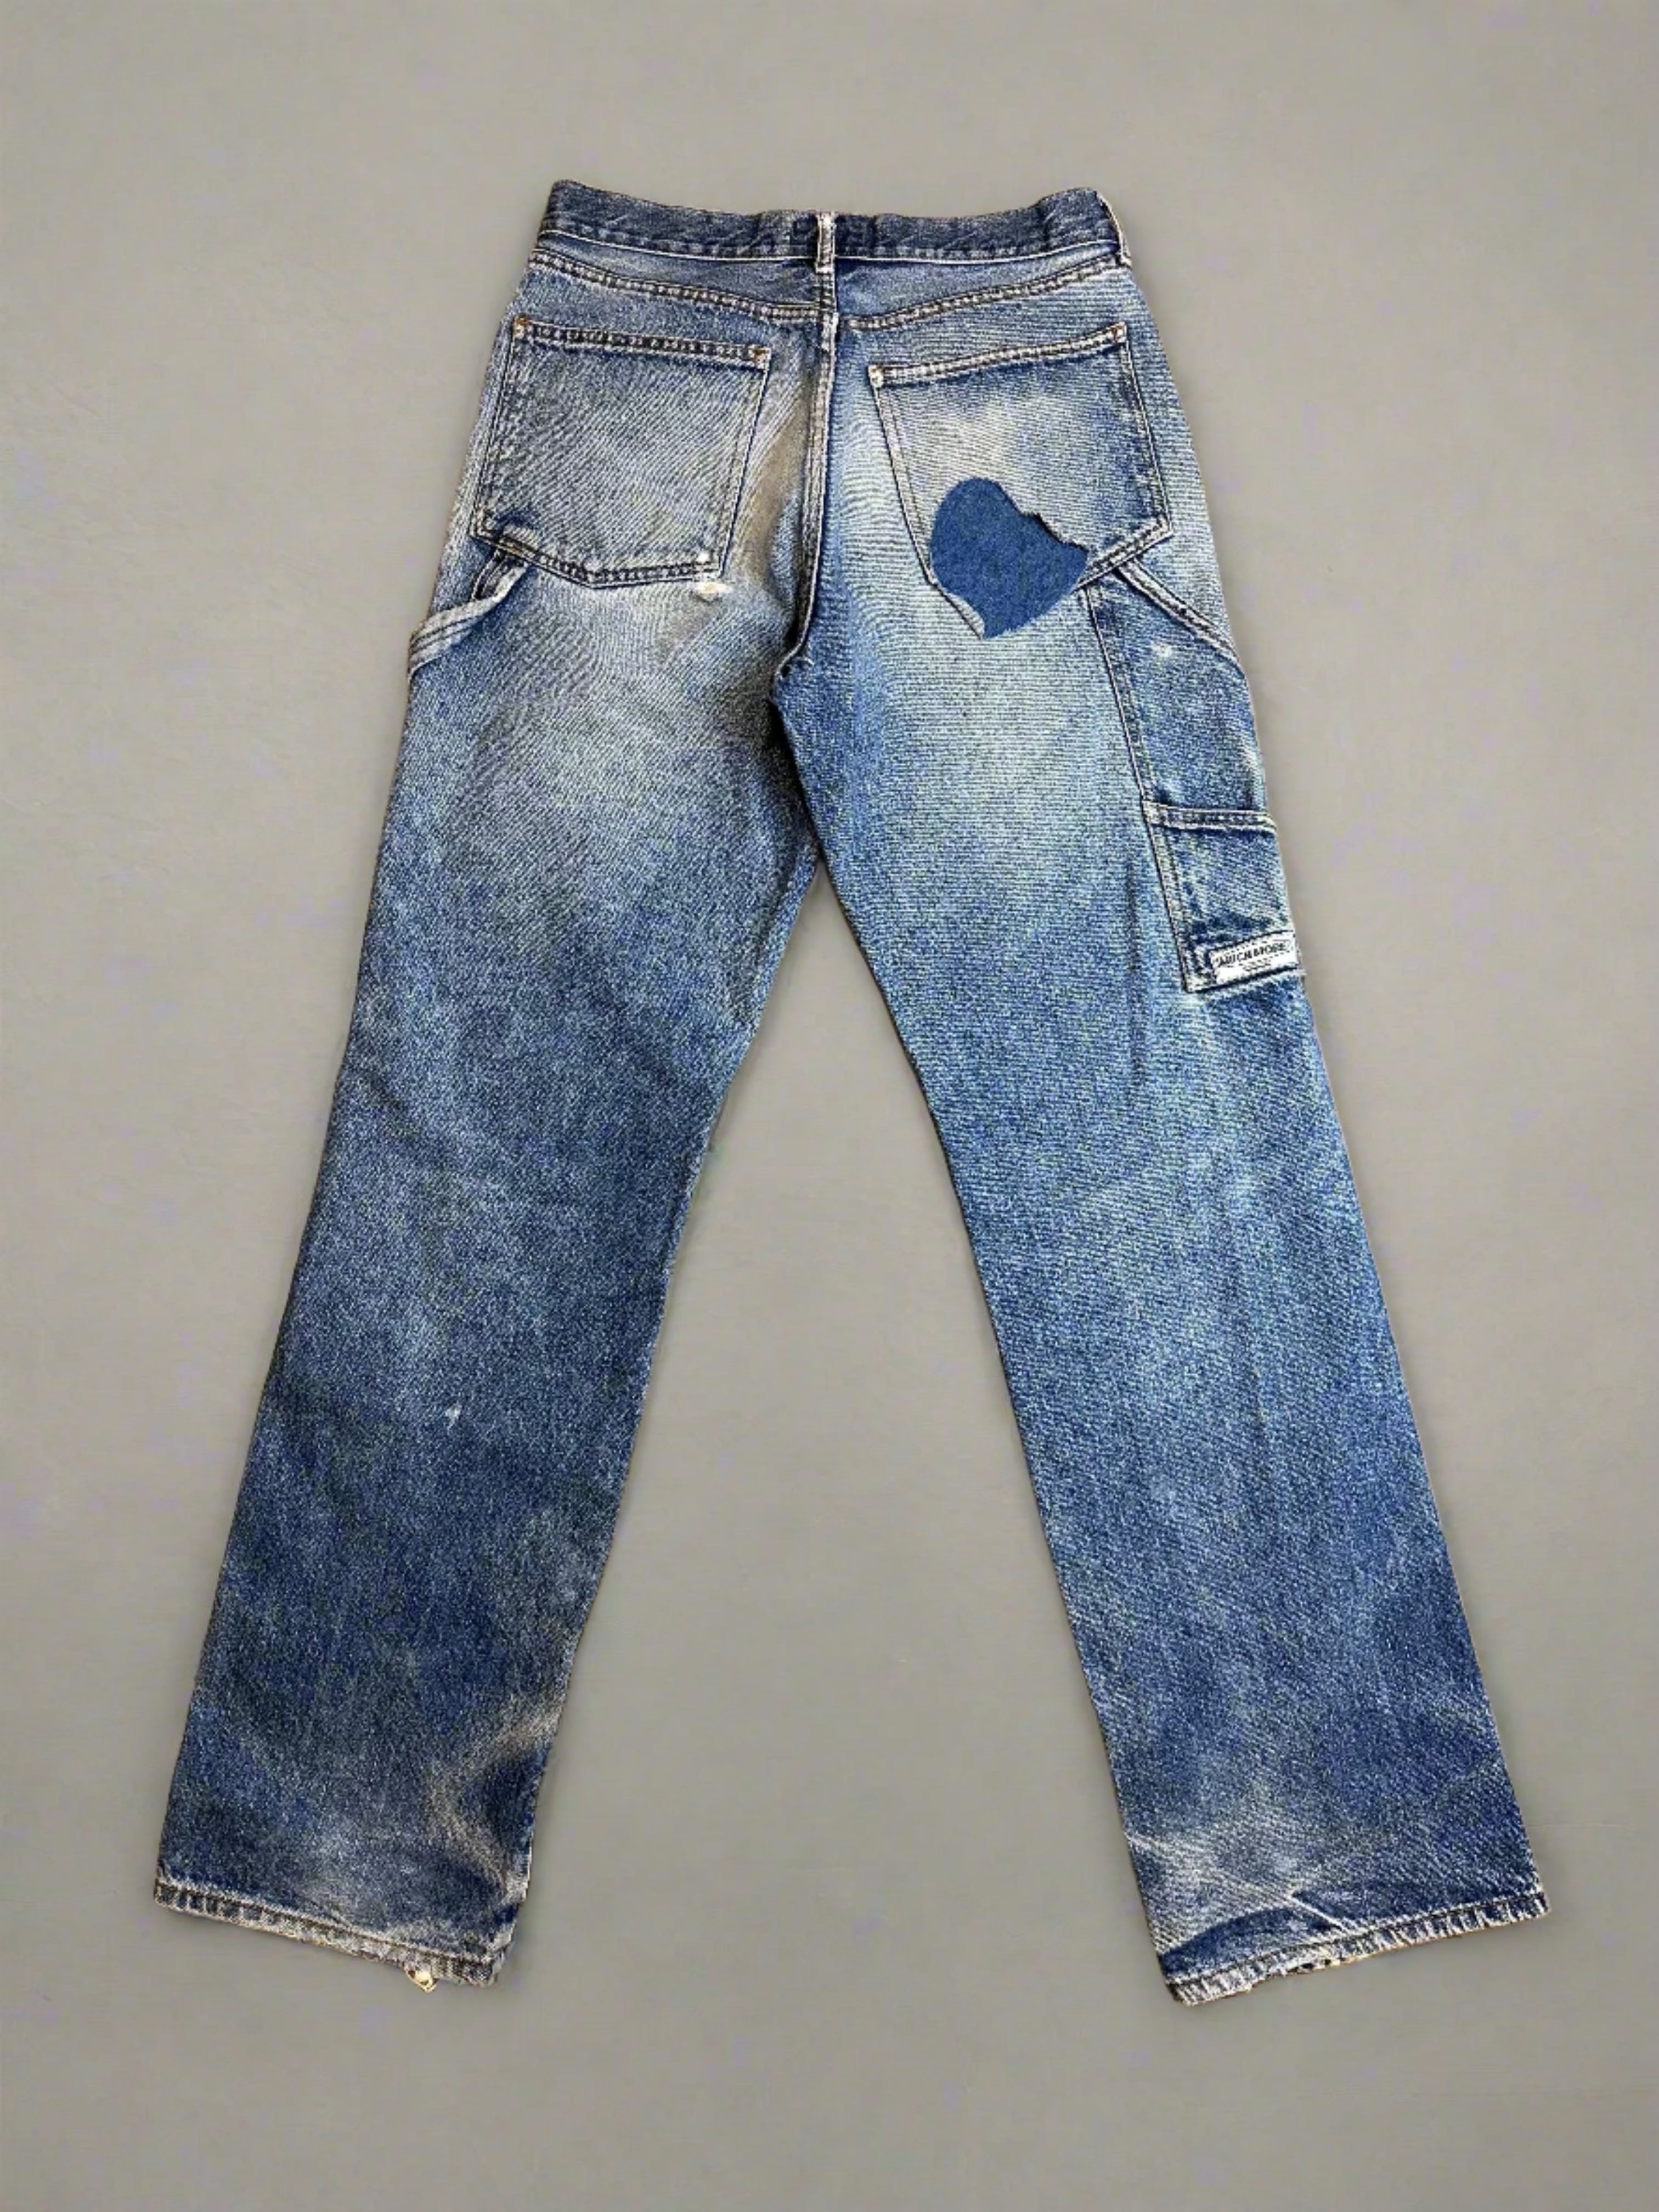 Vintage Much More Workwear Denim Pants - size 32x34